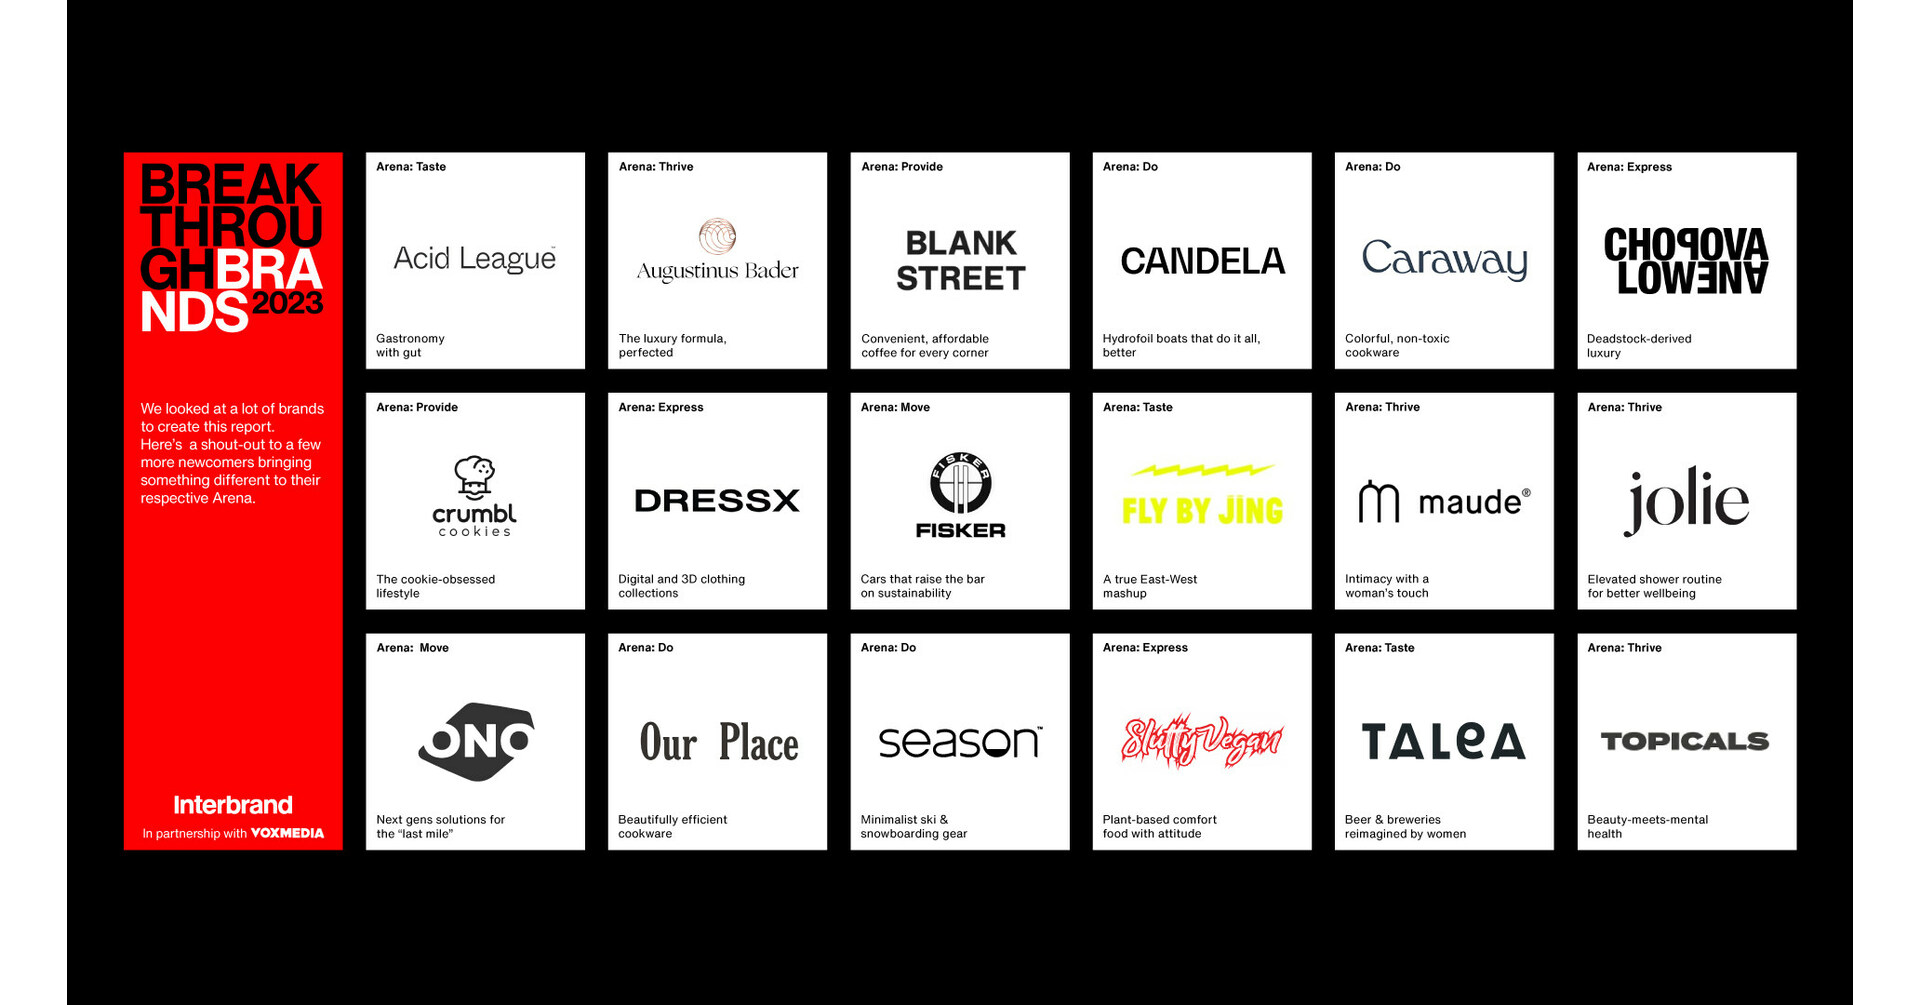 Interbrand List Of 100 Best Global Brands 2020 - Marketing Mind